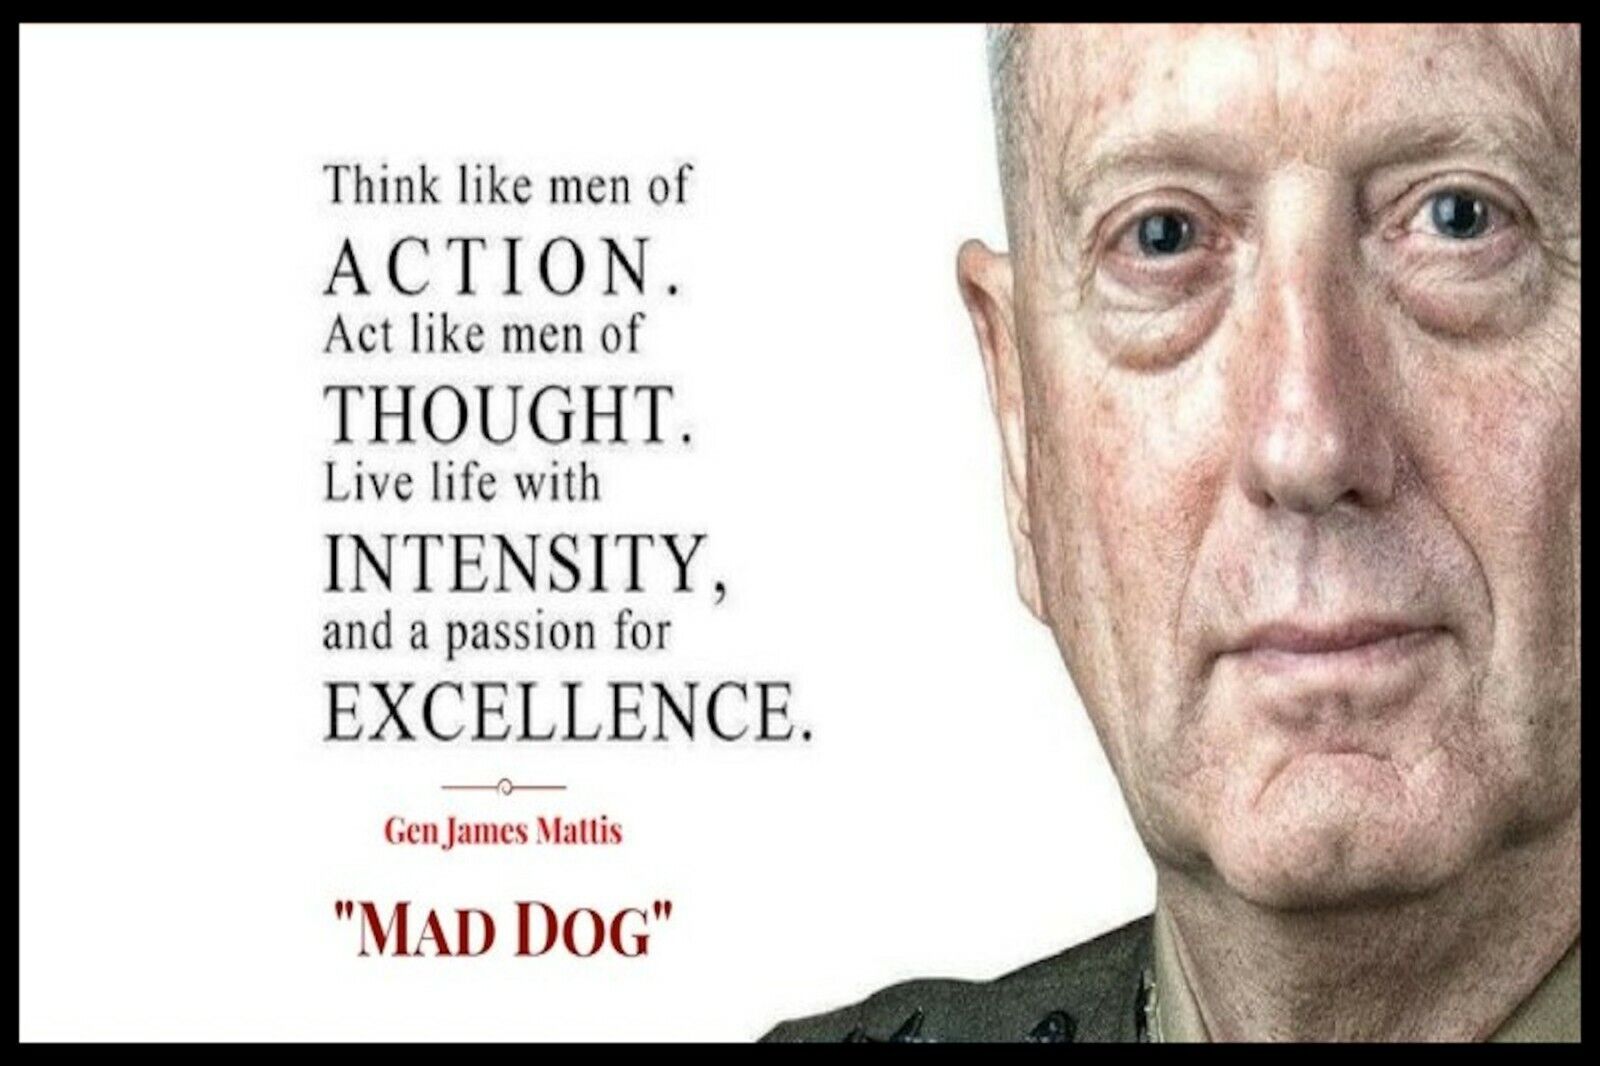 Four Star General James Mattis Mad Dog Quote Refrigerator Fridge Magnet 4X6 MAN